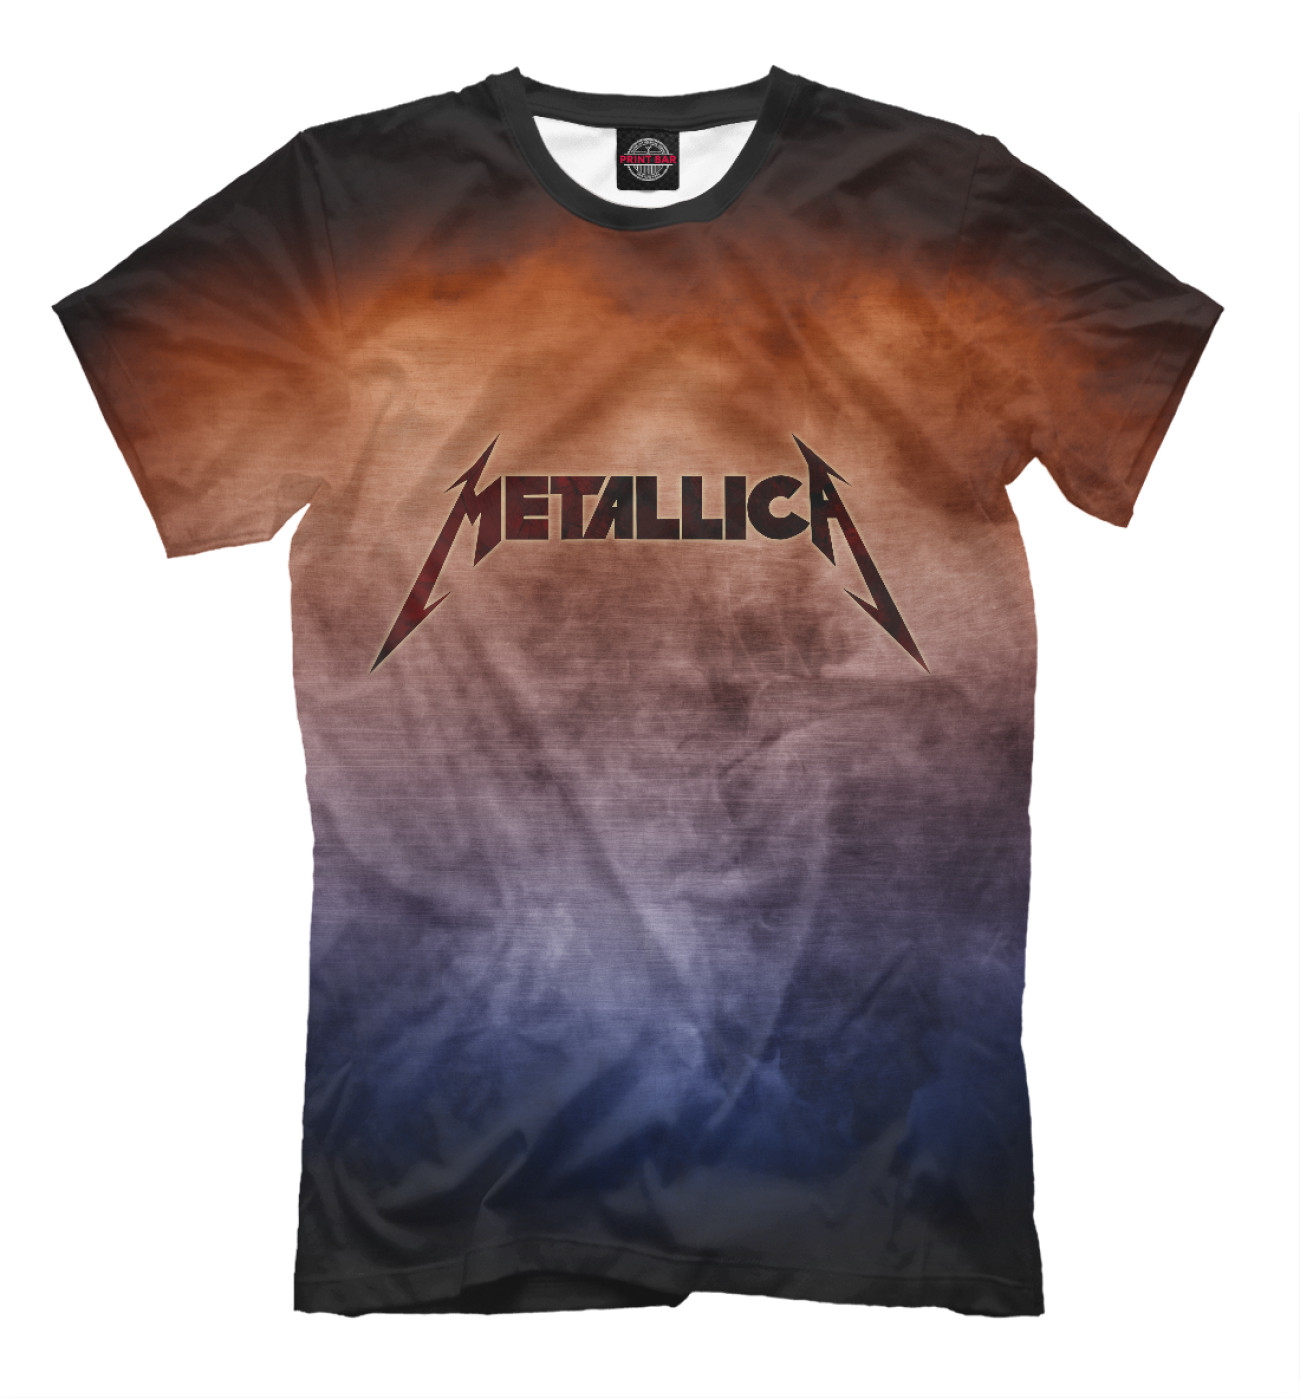 Мужская Футболка Metallica, артикул: MET-738420-fut-2